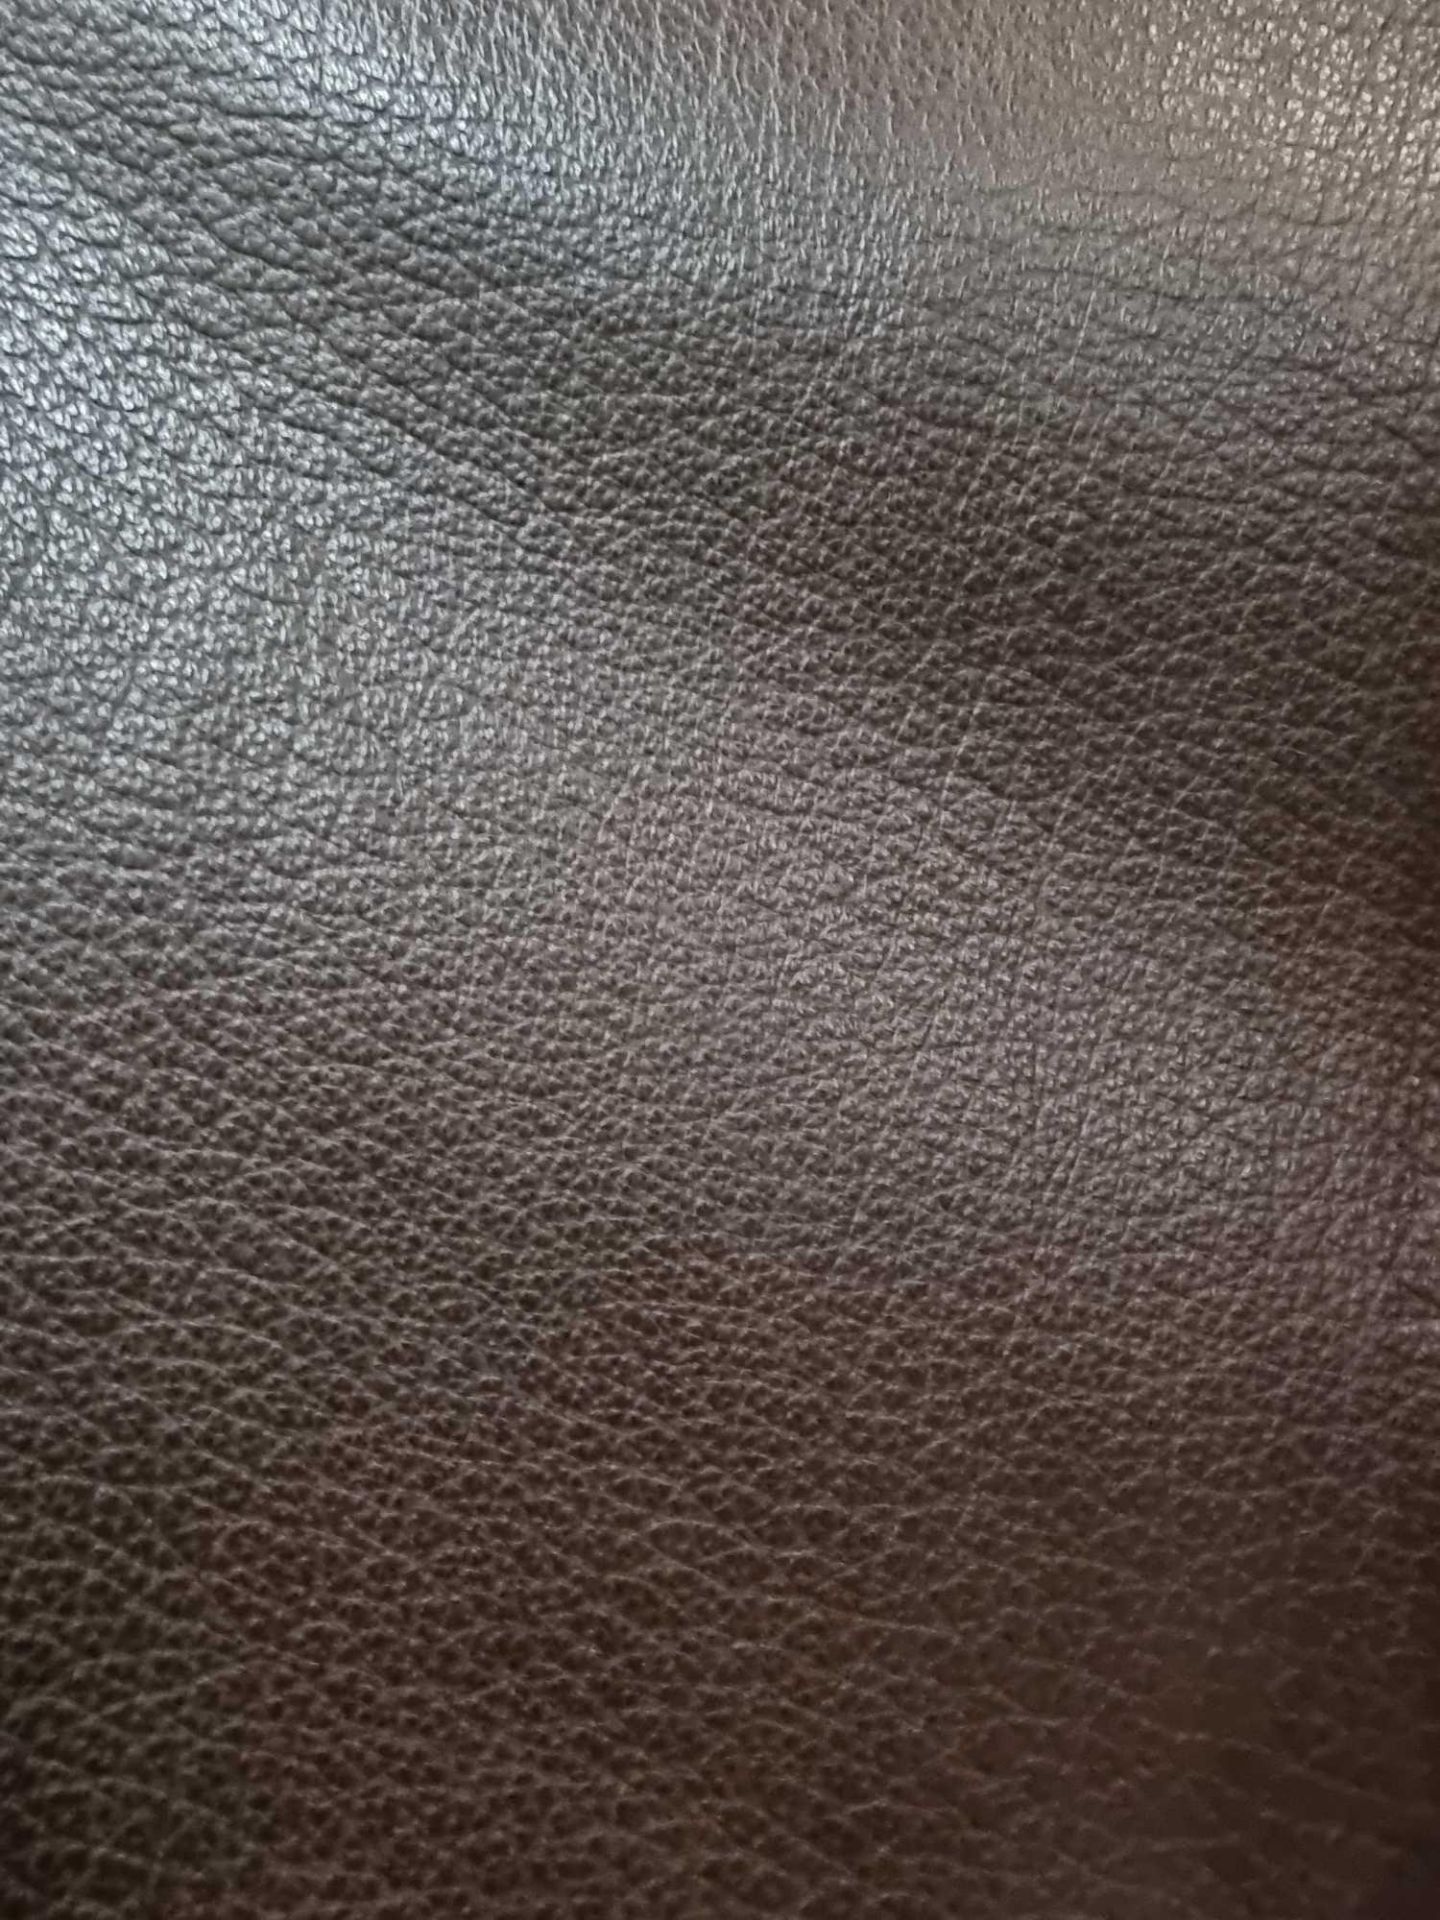 Mastrotto Hudson Chocolate Leather Hide approximately 4.18mÂ² 2.2 x 1.9cm - Bild 2 aus 2